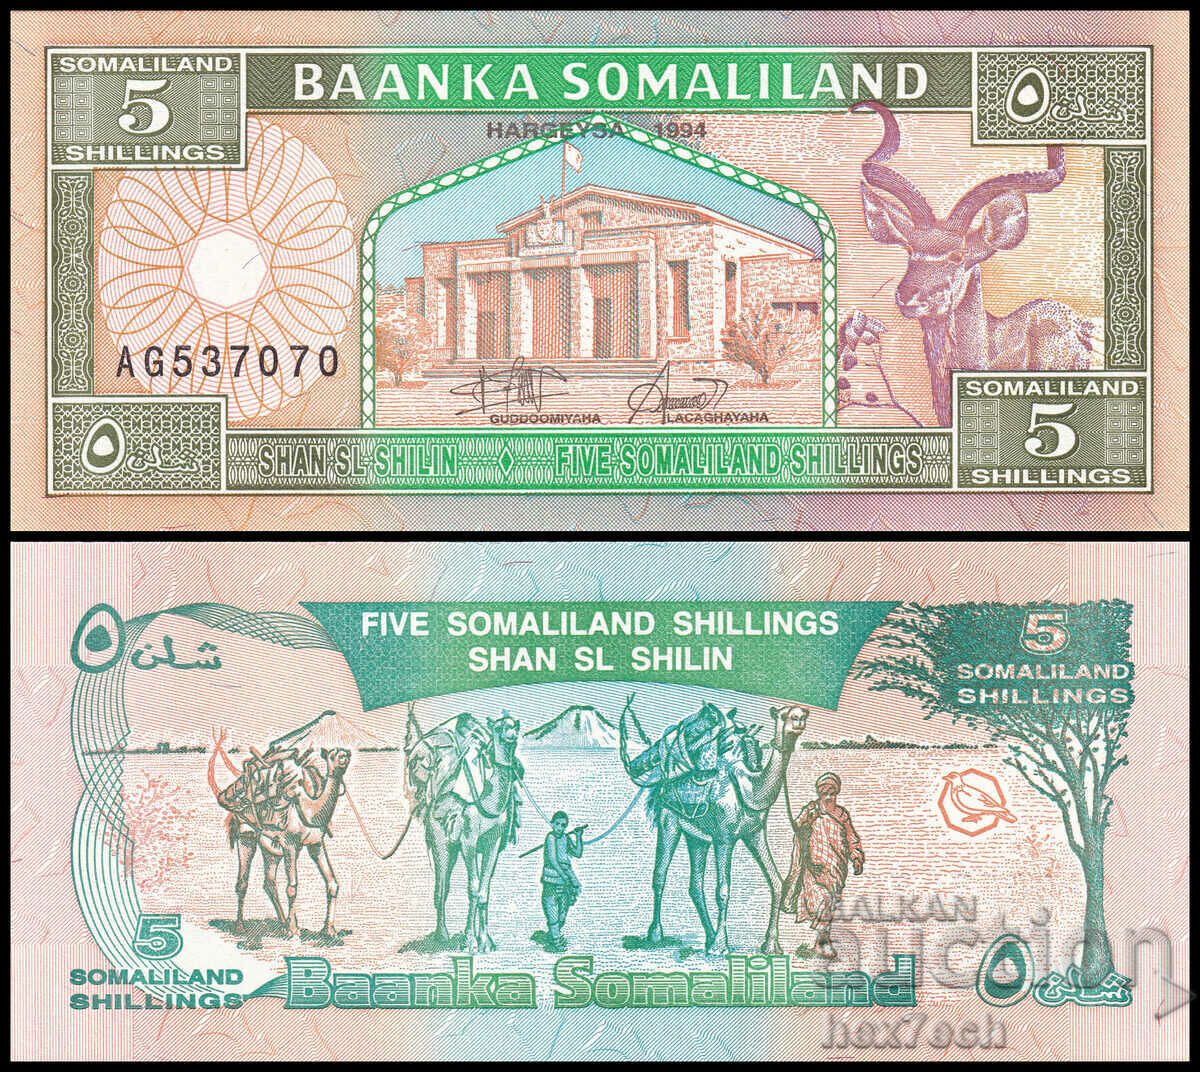 ❤️ ⭐ Somaliland 1994 5 Shillings UNC new ⭐ ❤️